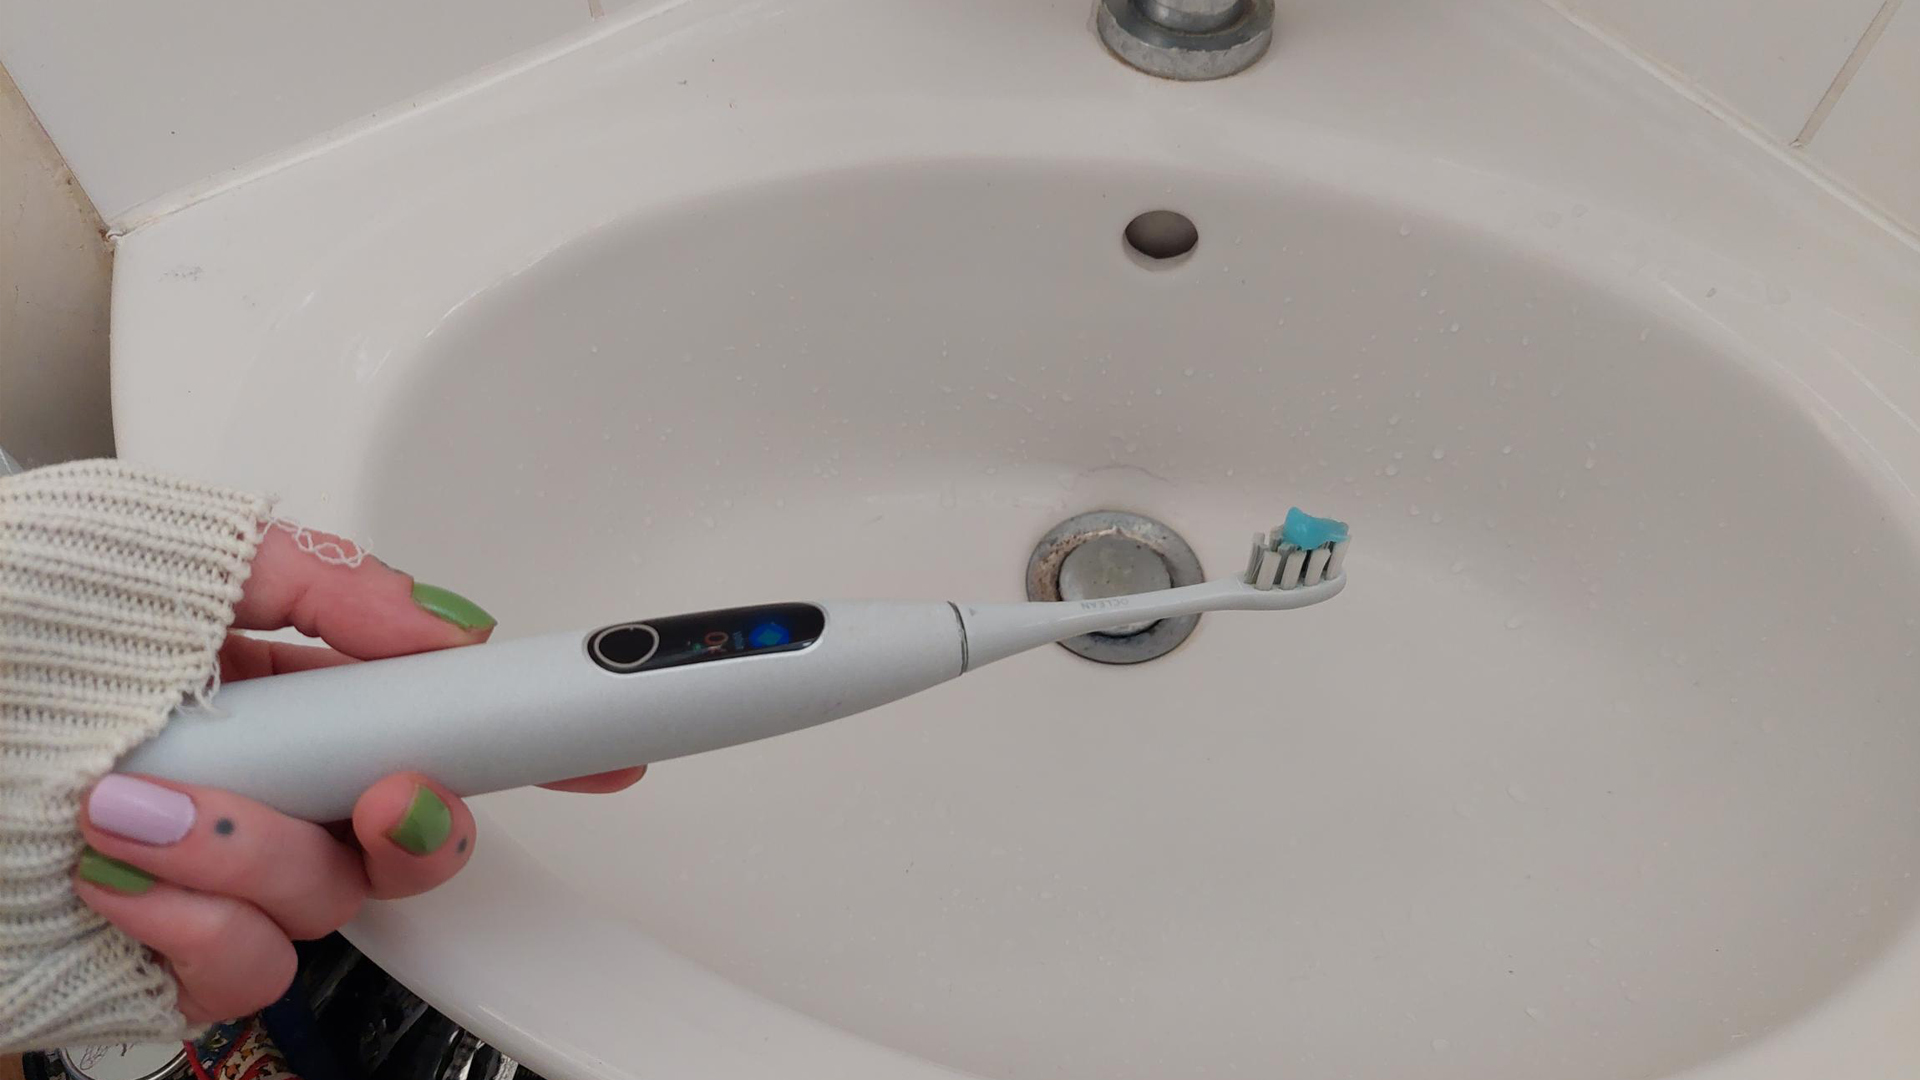 OcleanXElite Electric Toothbrush